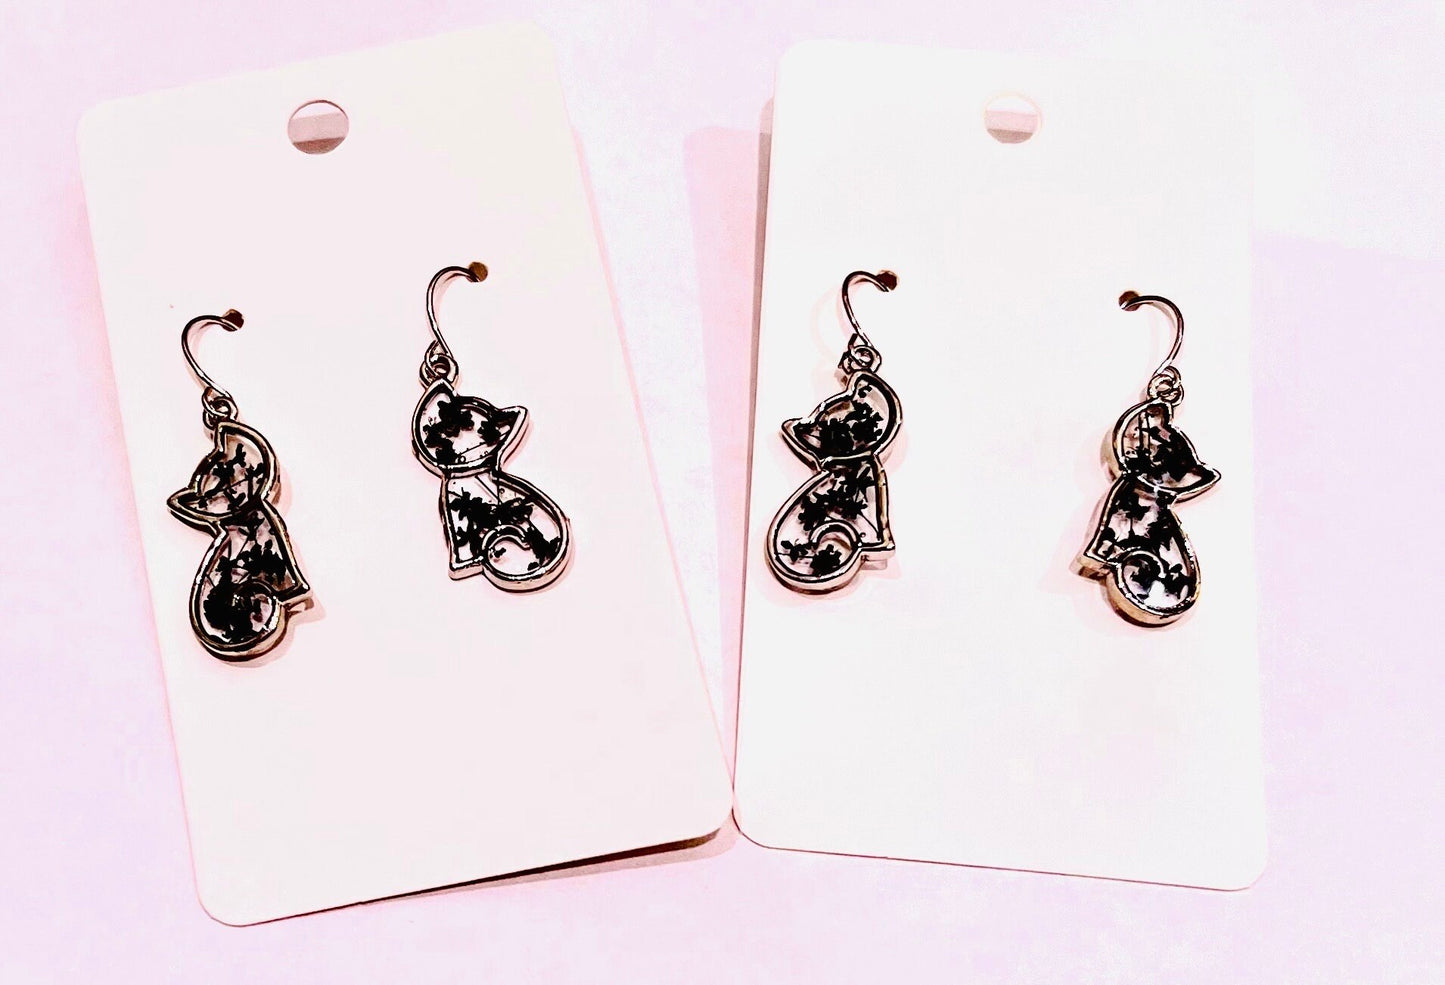 Handmade Real Pressed Black Flowers. Black Cat Earrings. Black Queen Anne’s lace flowers. 18K gold plated earrings. Cat Lovers.